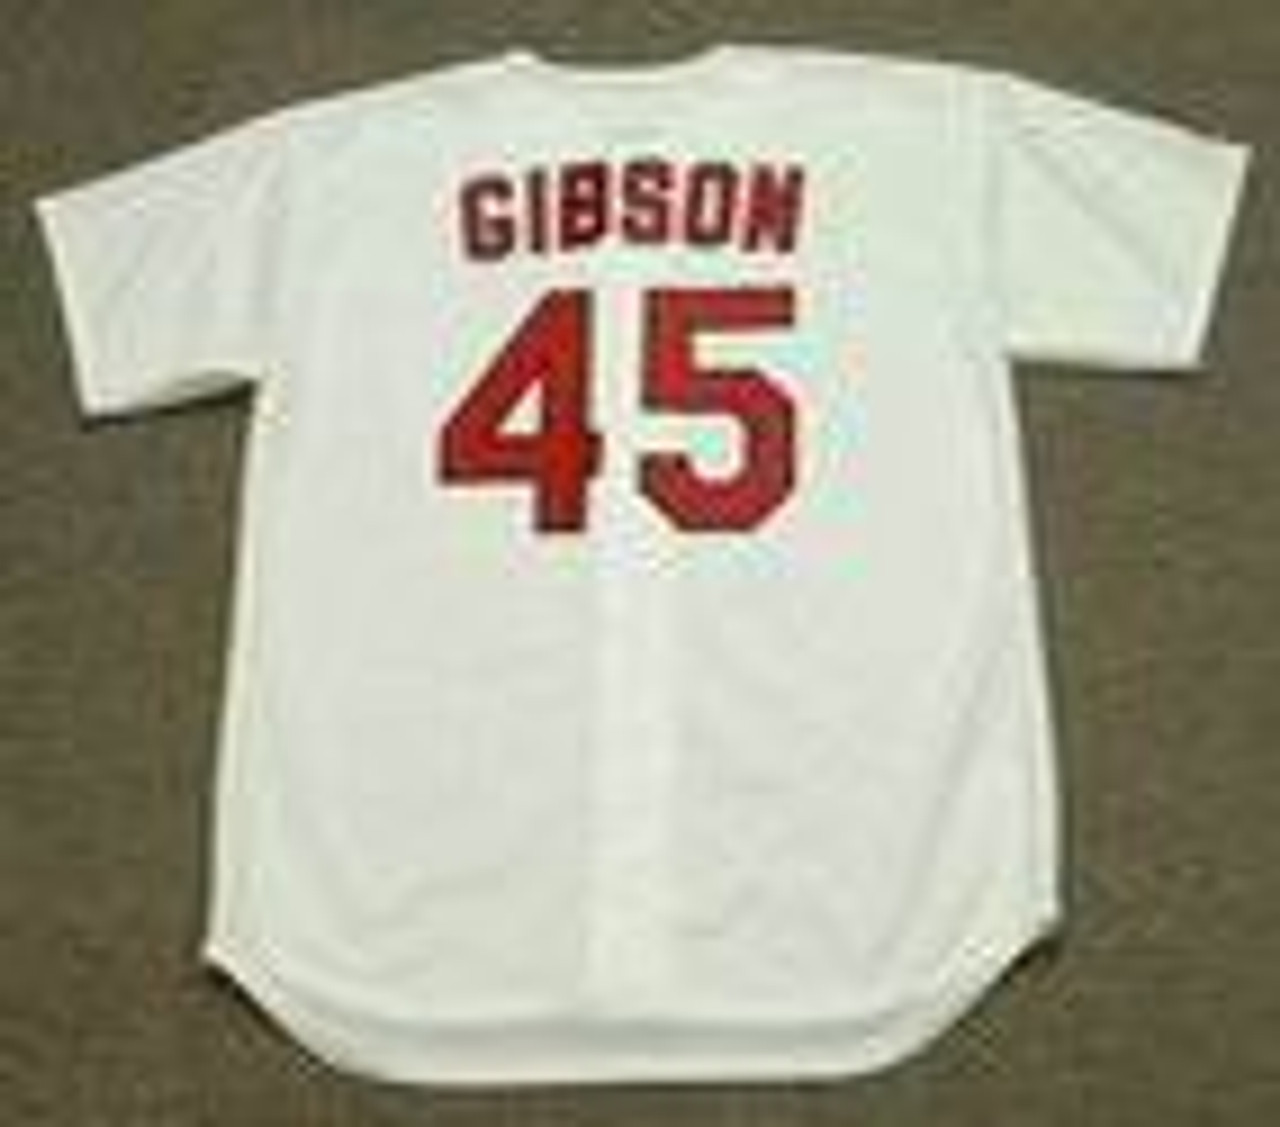 Bob Gibson Jersey - St. Louis Cardinals 1974 Home Cooperstown Throwback MLB  Baseball Jersey